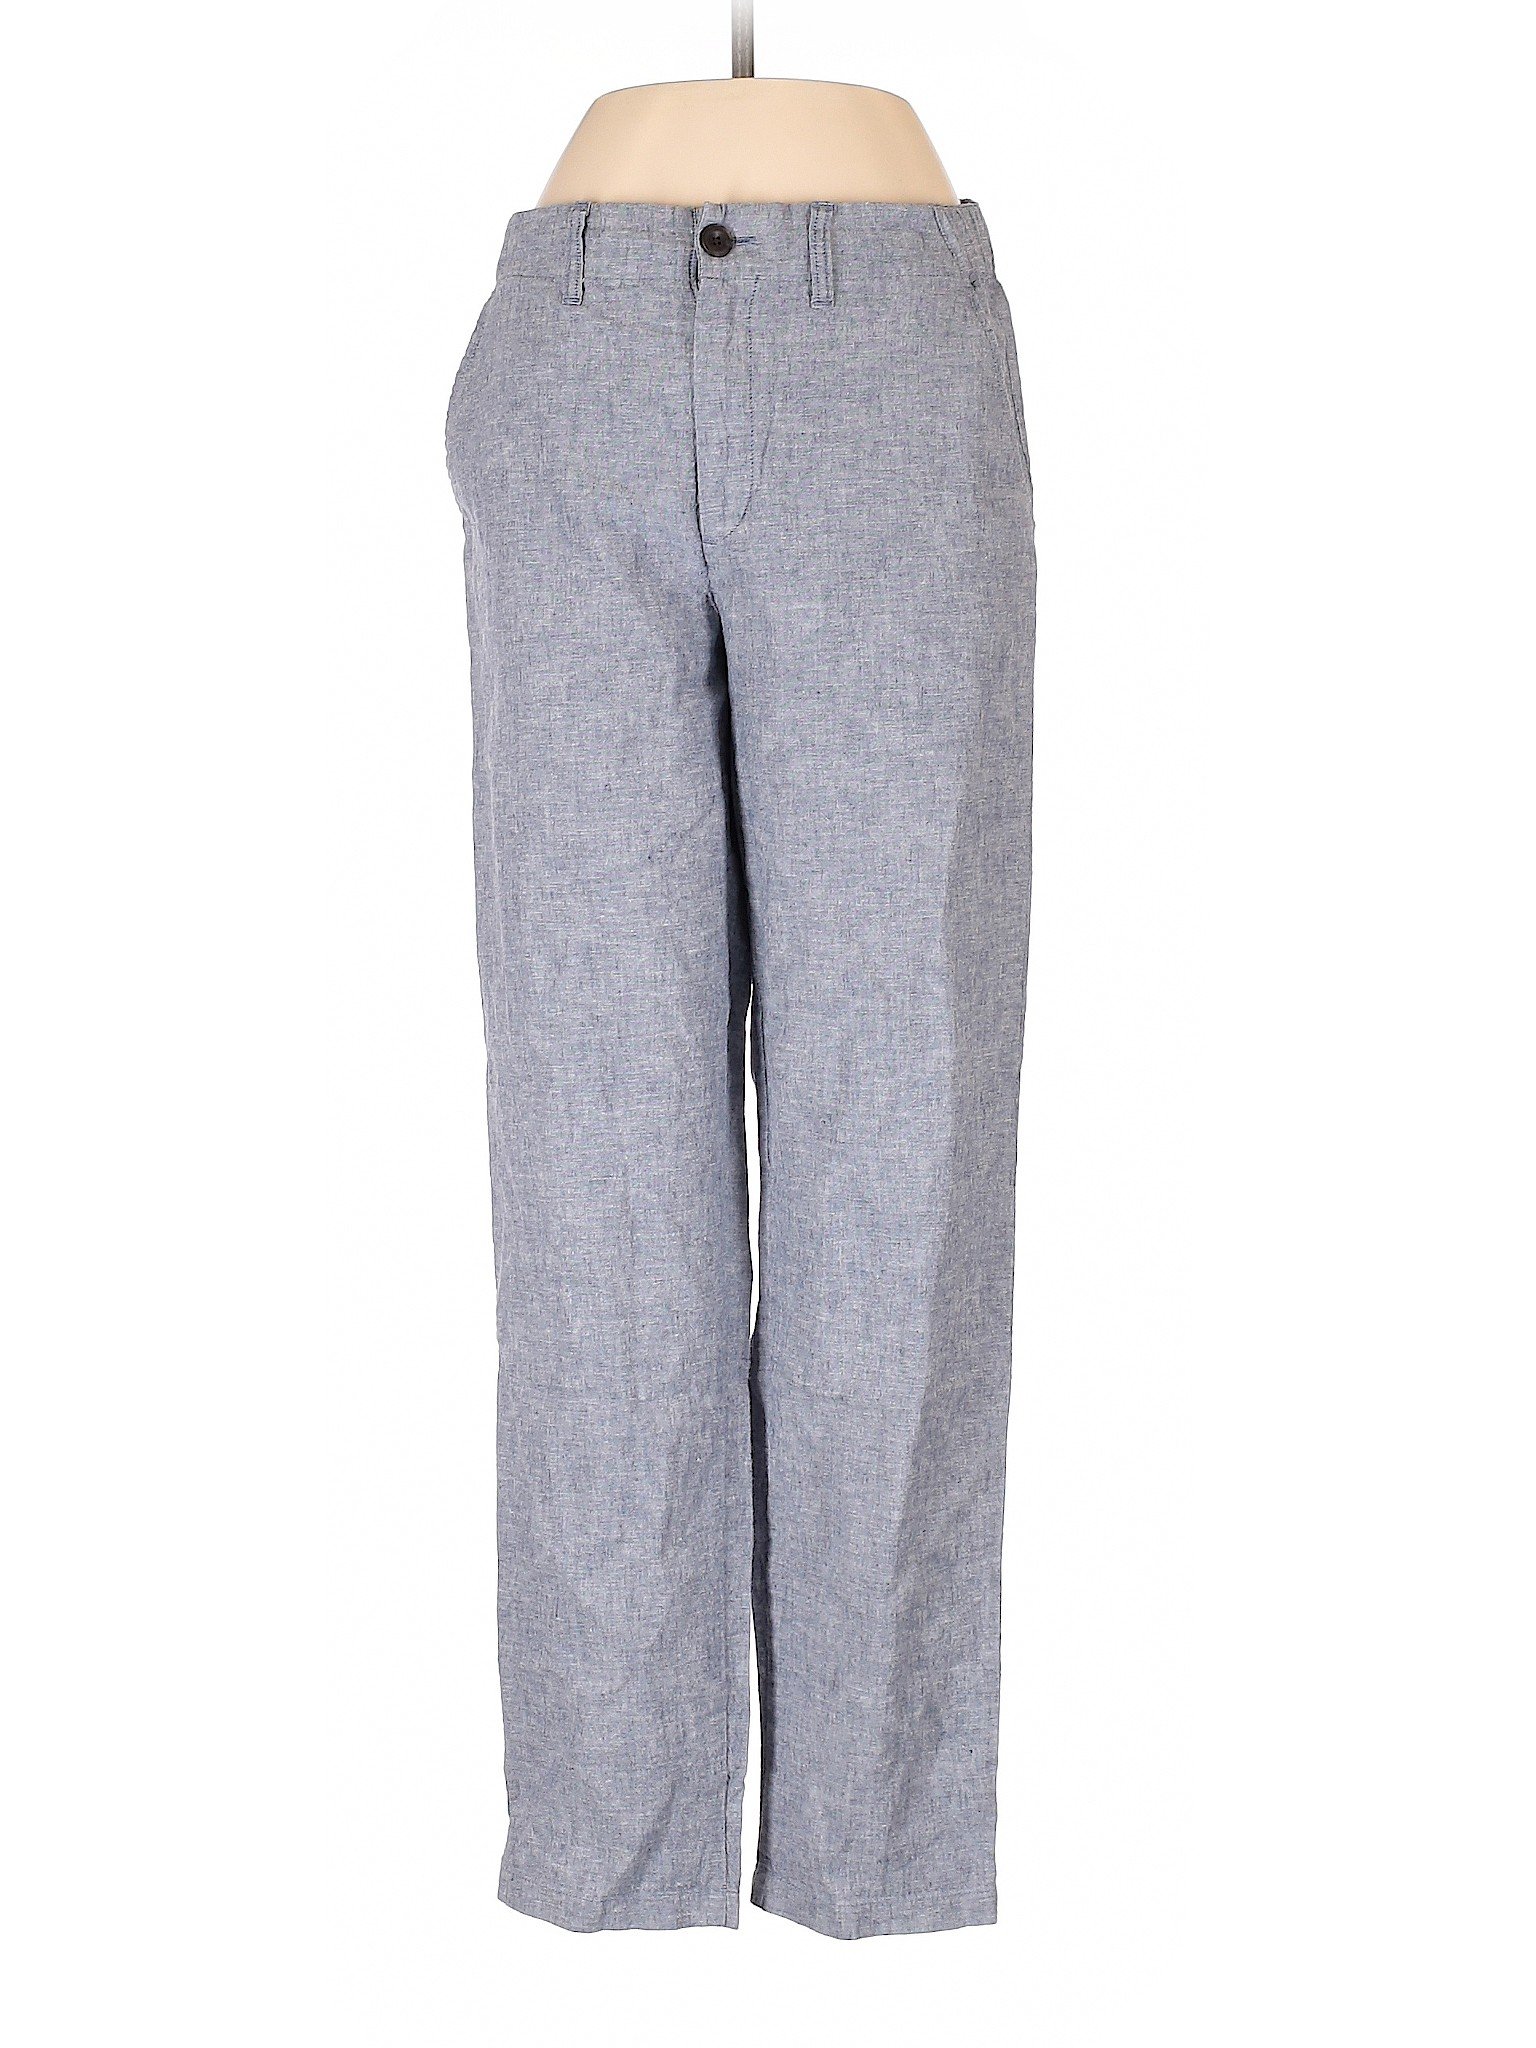 Uniqlo Women Gray Linen Pants XS | eBay